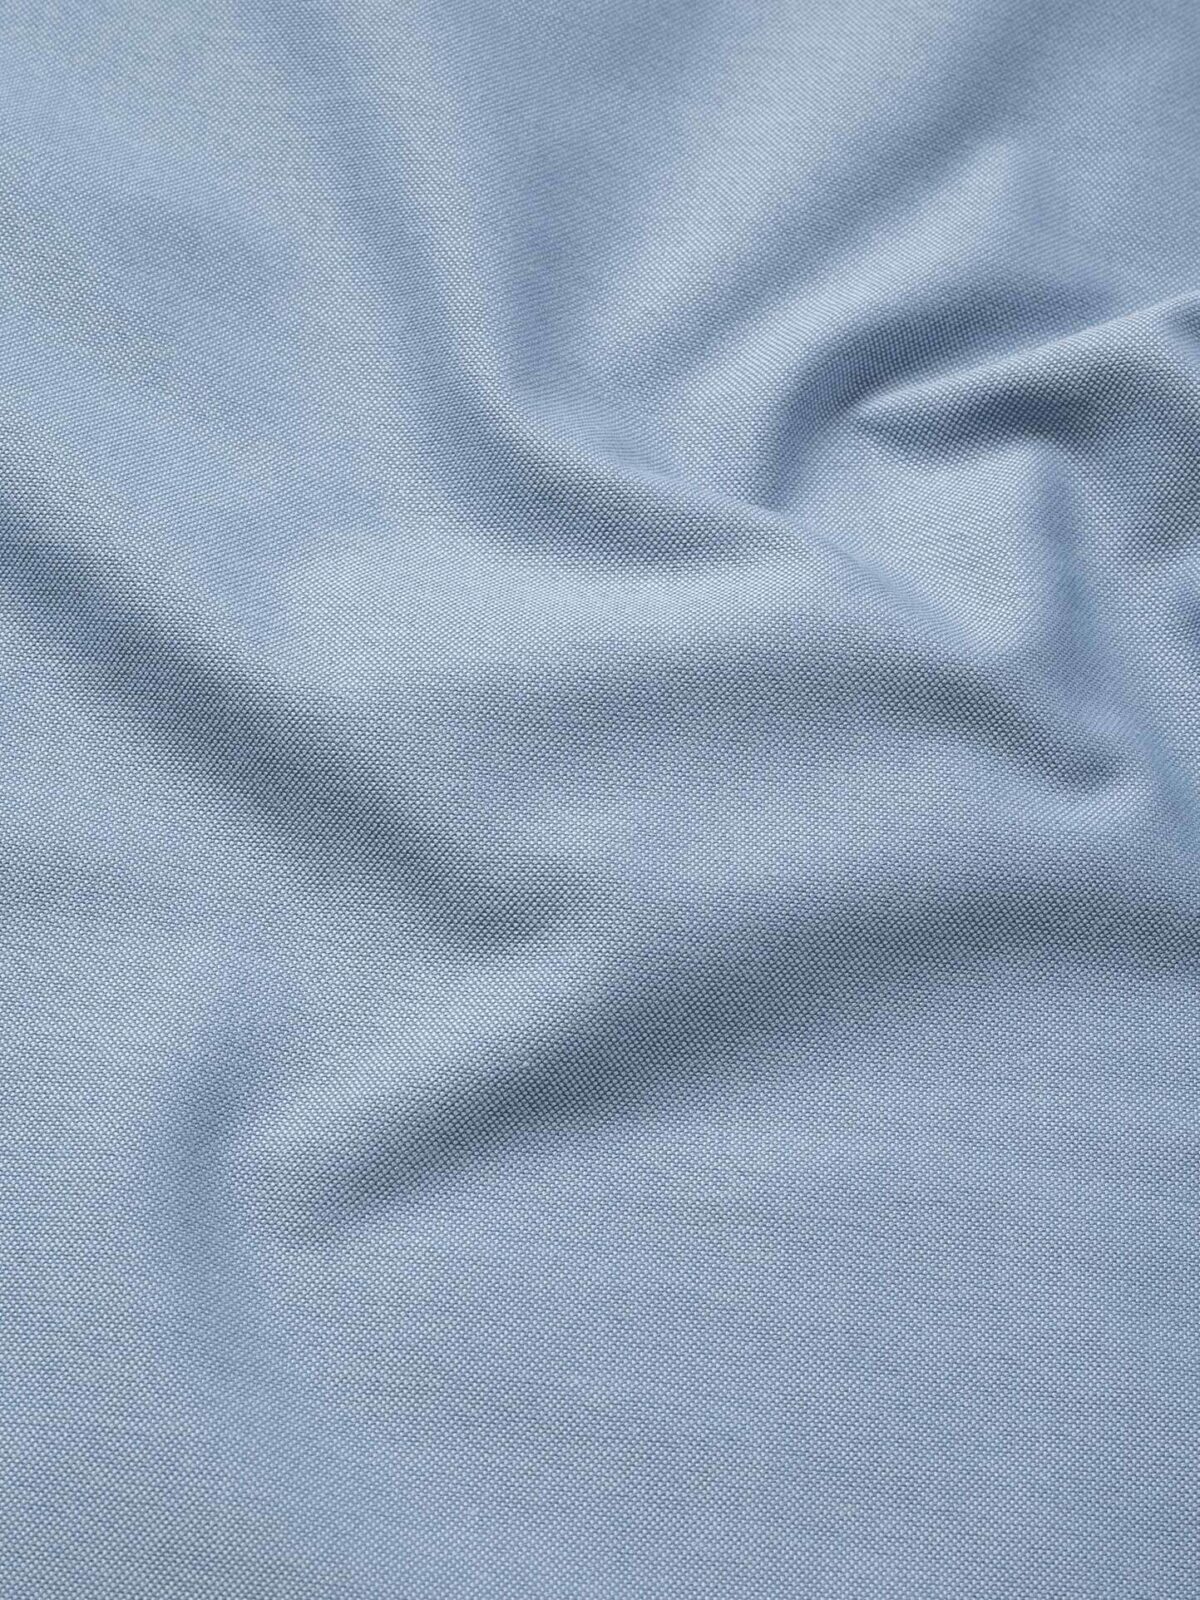 American Pima Atlantic Blue Oxford Cloth Shirts by Proper Cloth